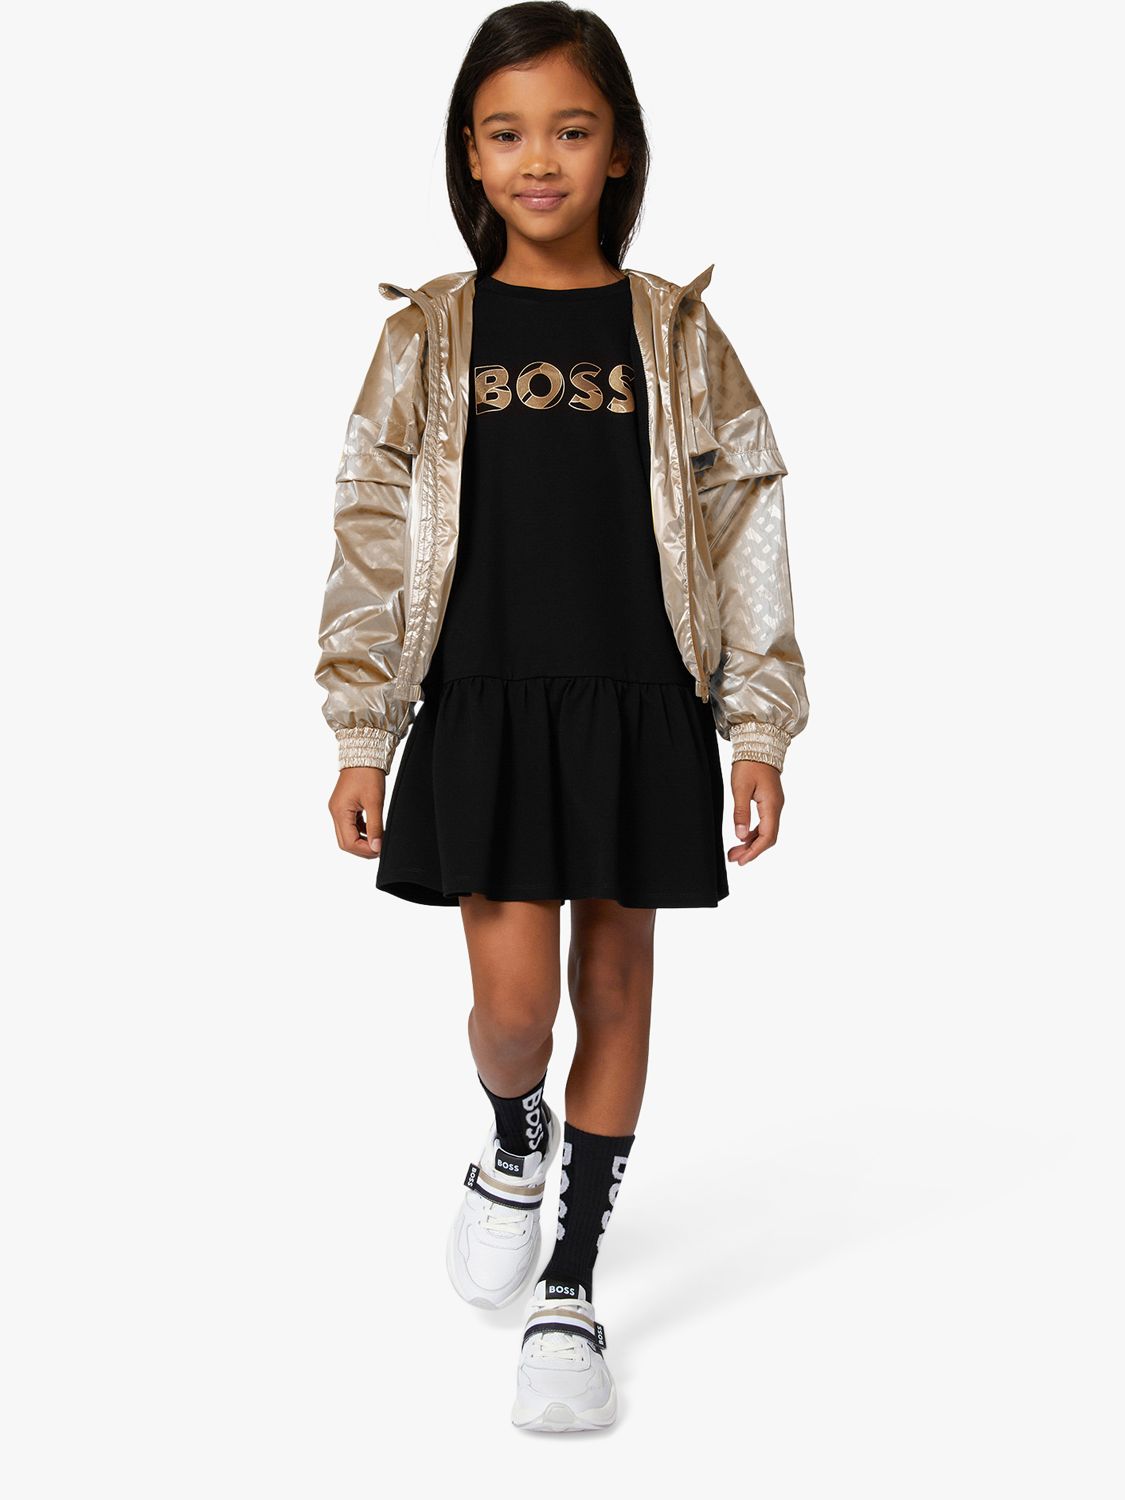 Buy BOSS Kids' Milano Logo Dress, Black Online at johnlewis.com